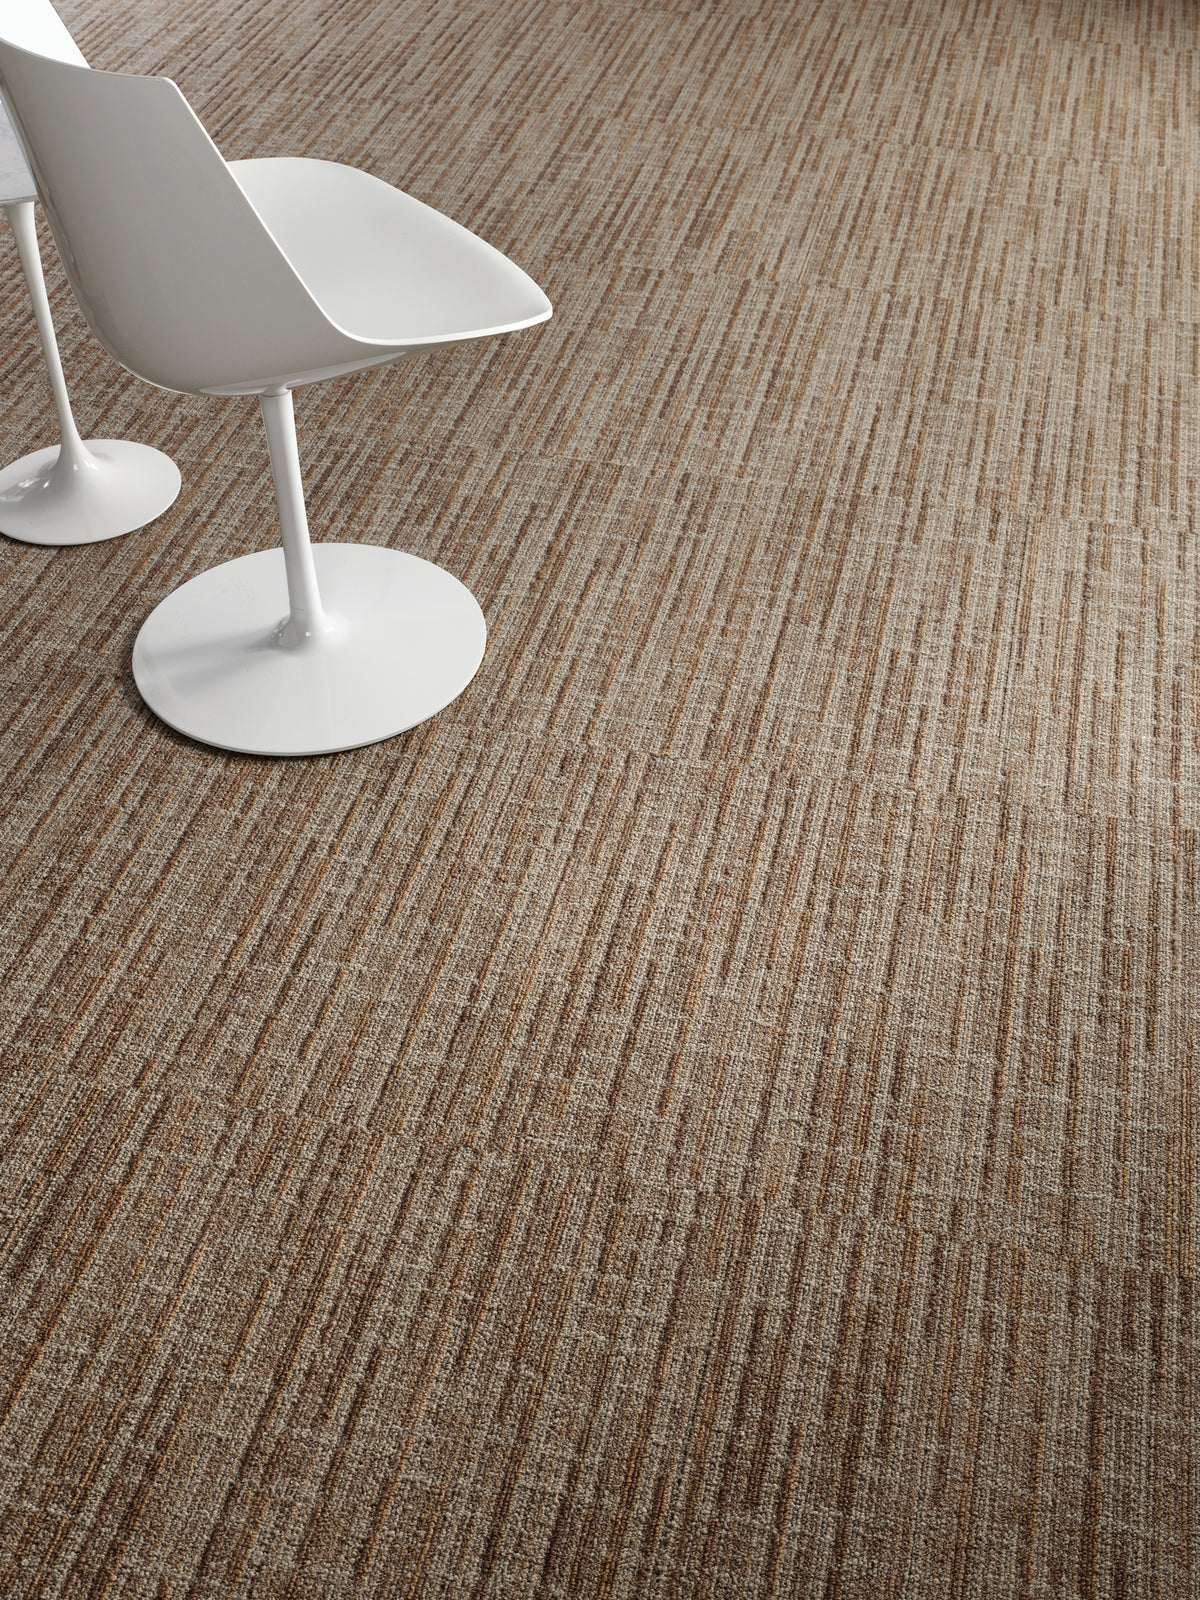 Mohawk Group - Mind Over Matter - Forward Vision - Commercial Carpet Tile - Flair